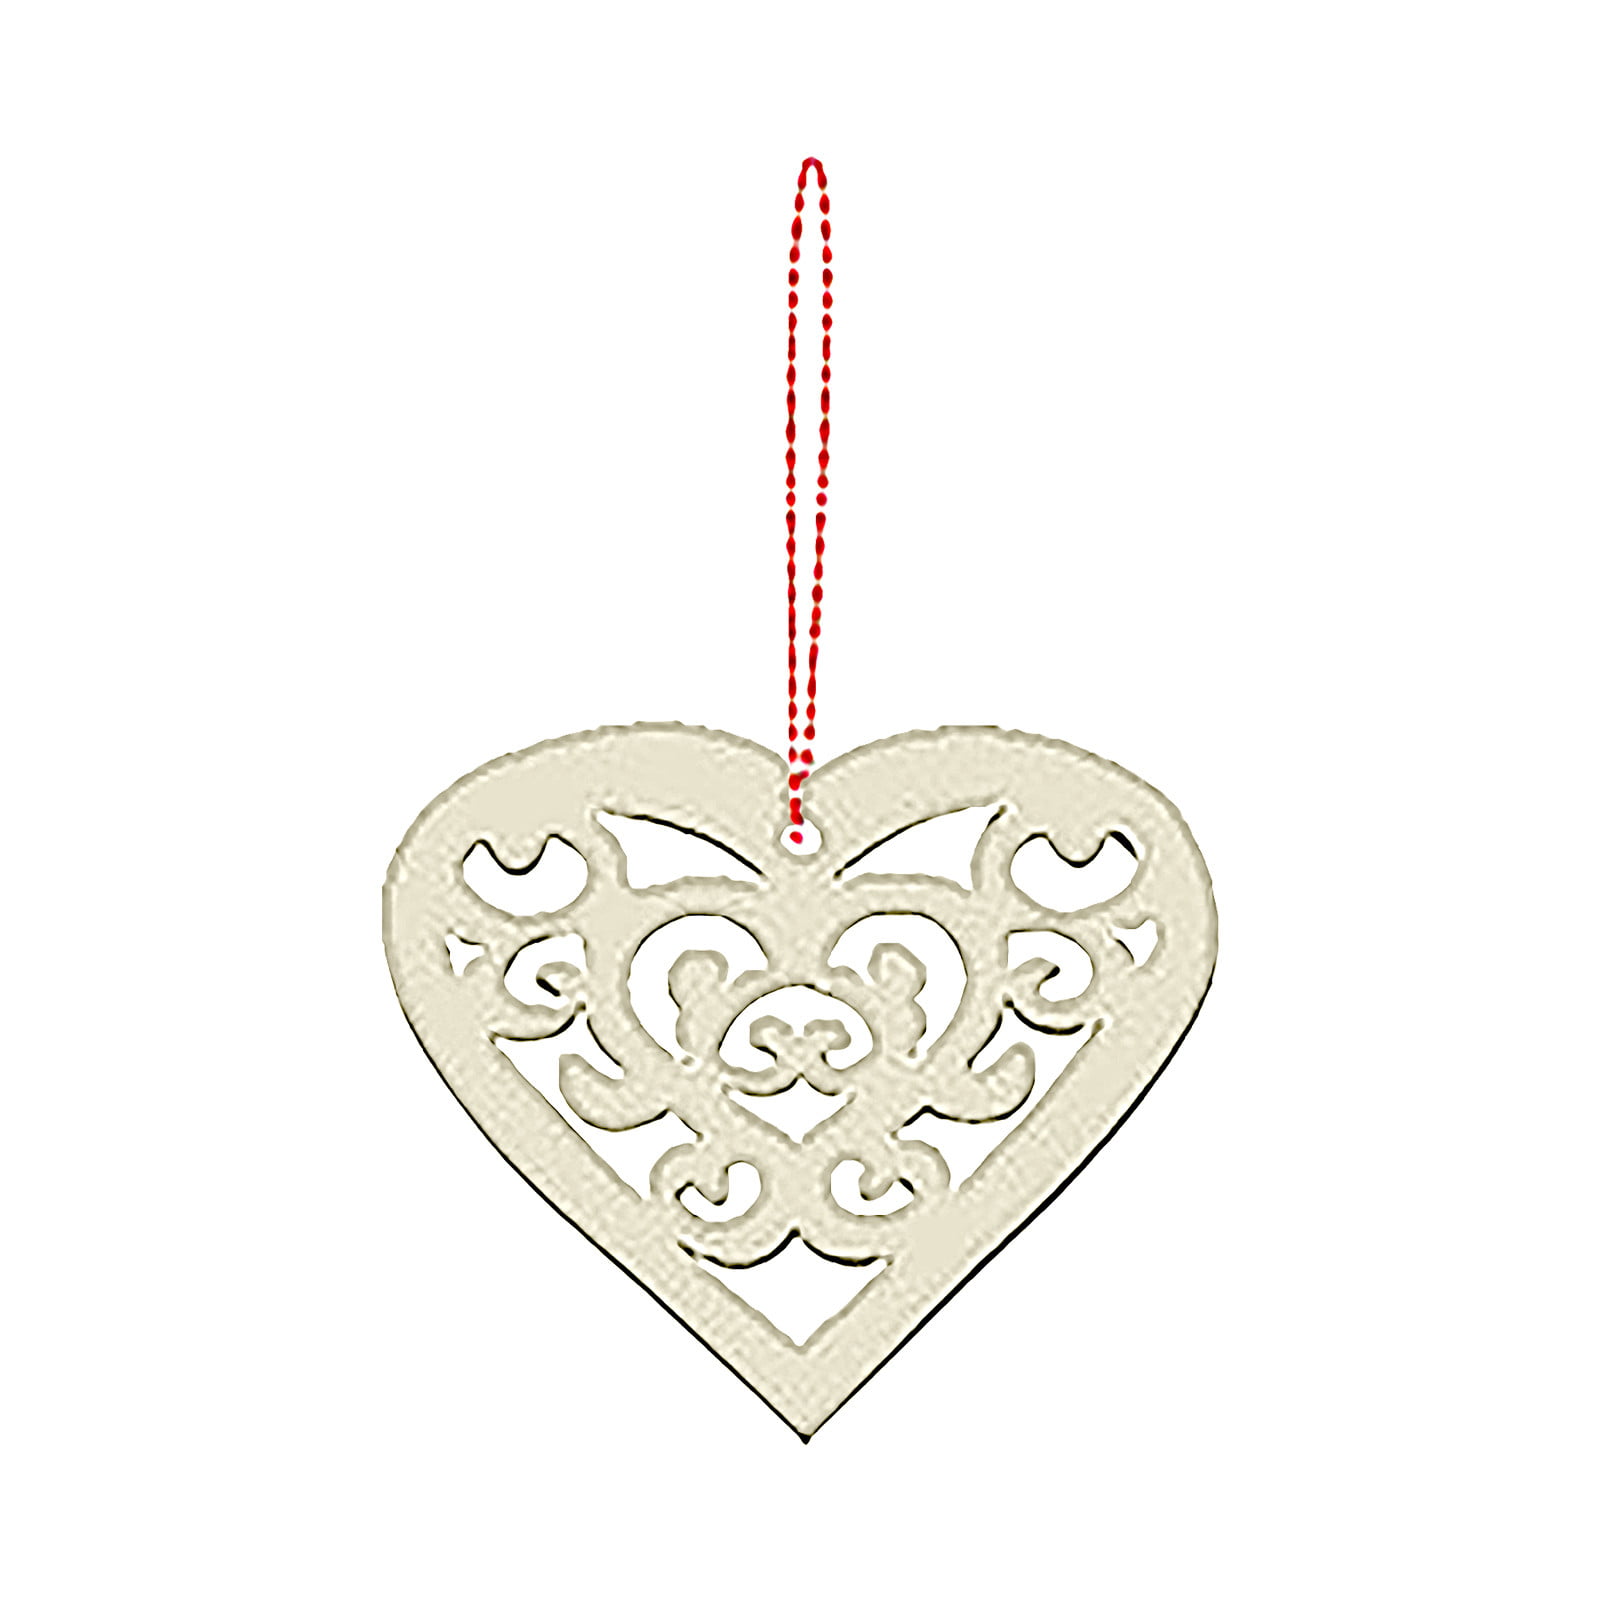 50Pcs Theme Letter Wooden Heart Chips Wedding Decor Embellishments Craft Supply 